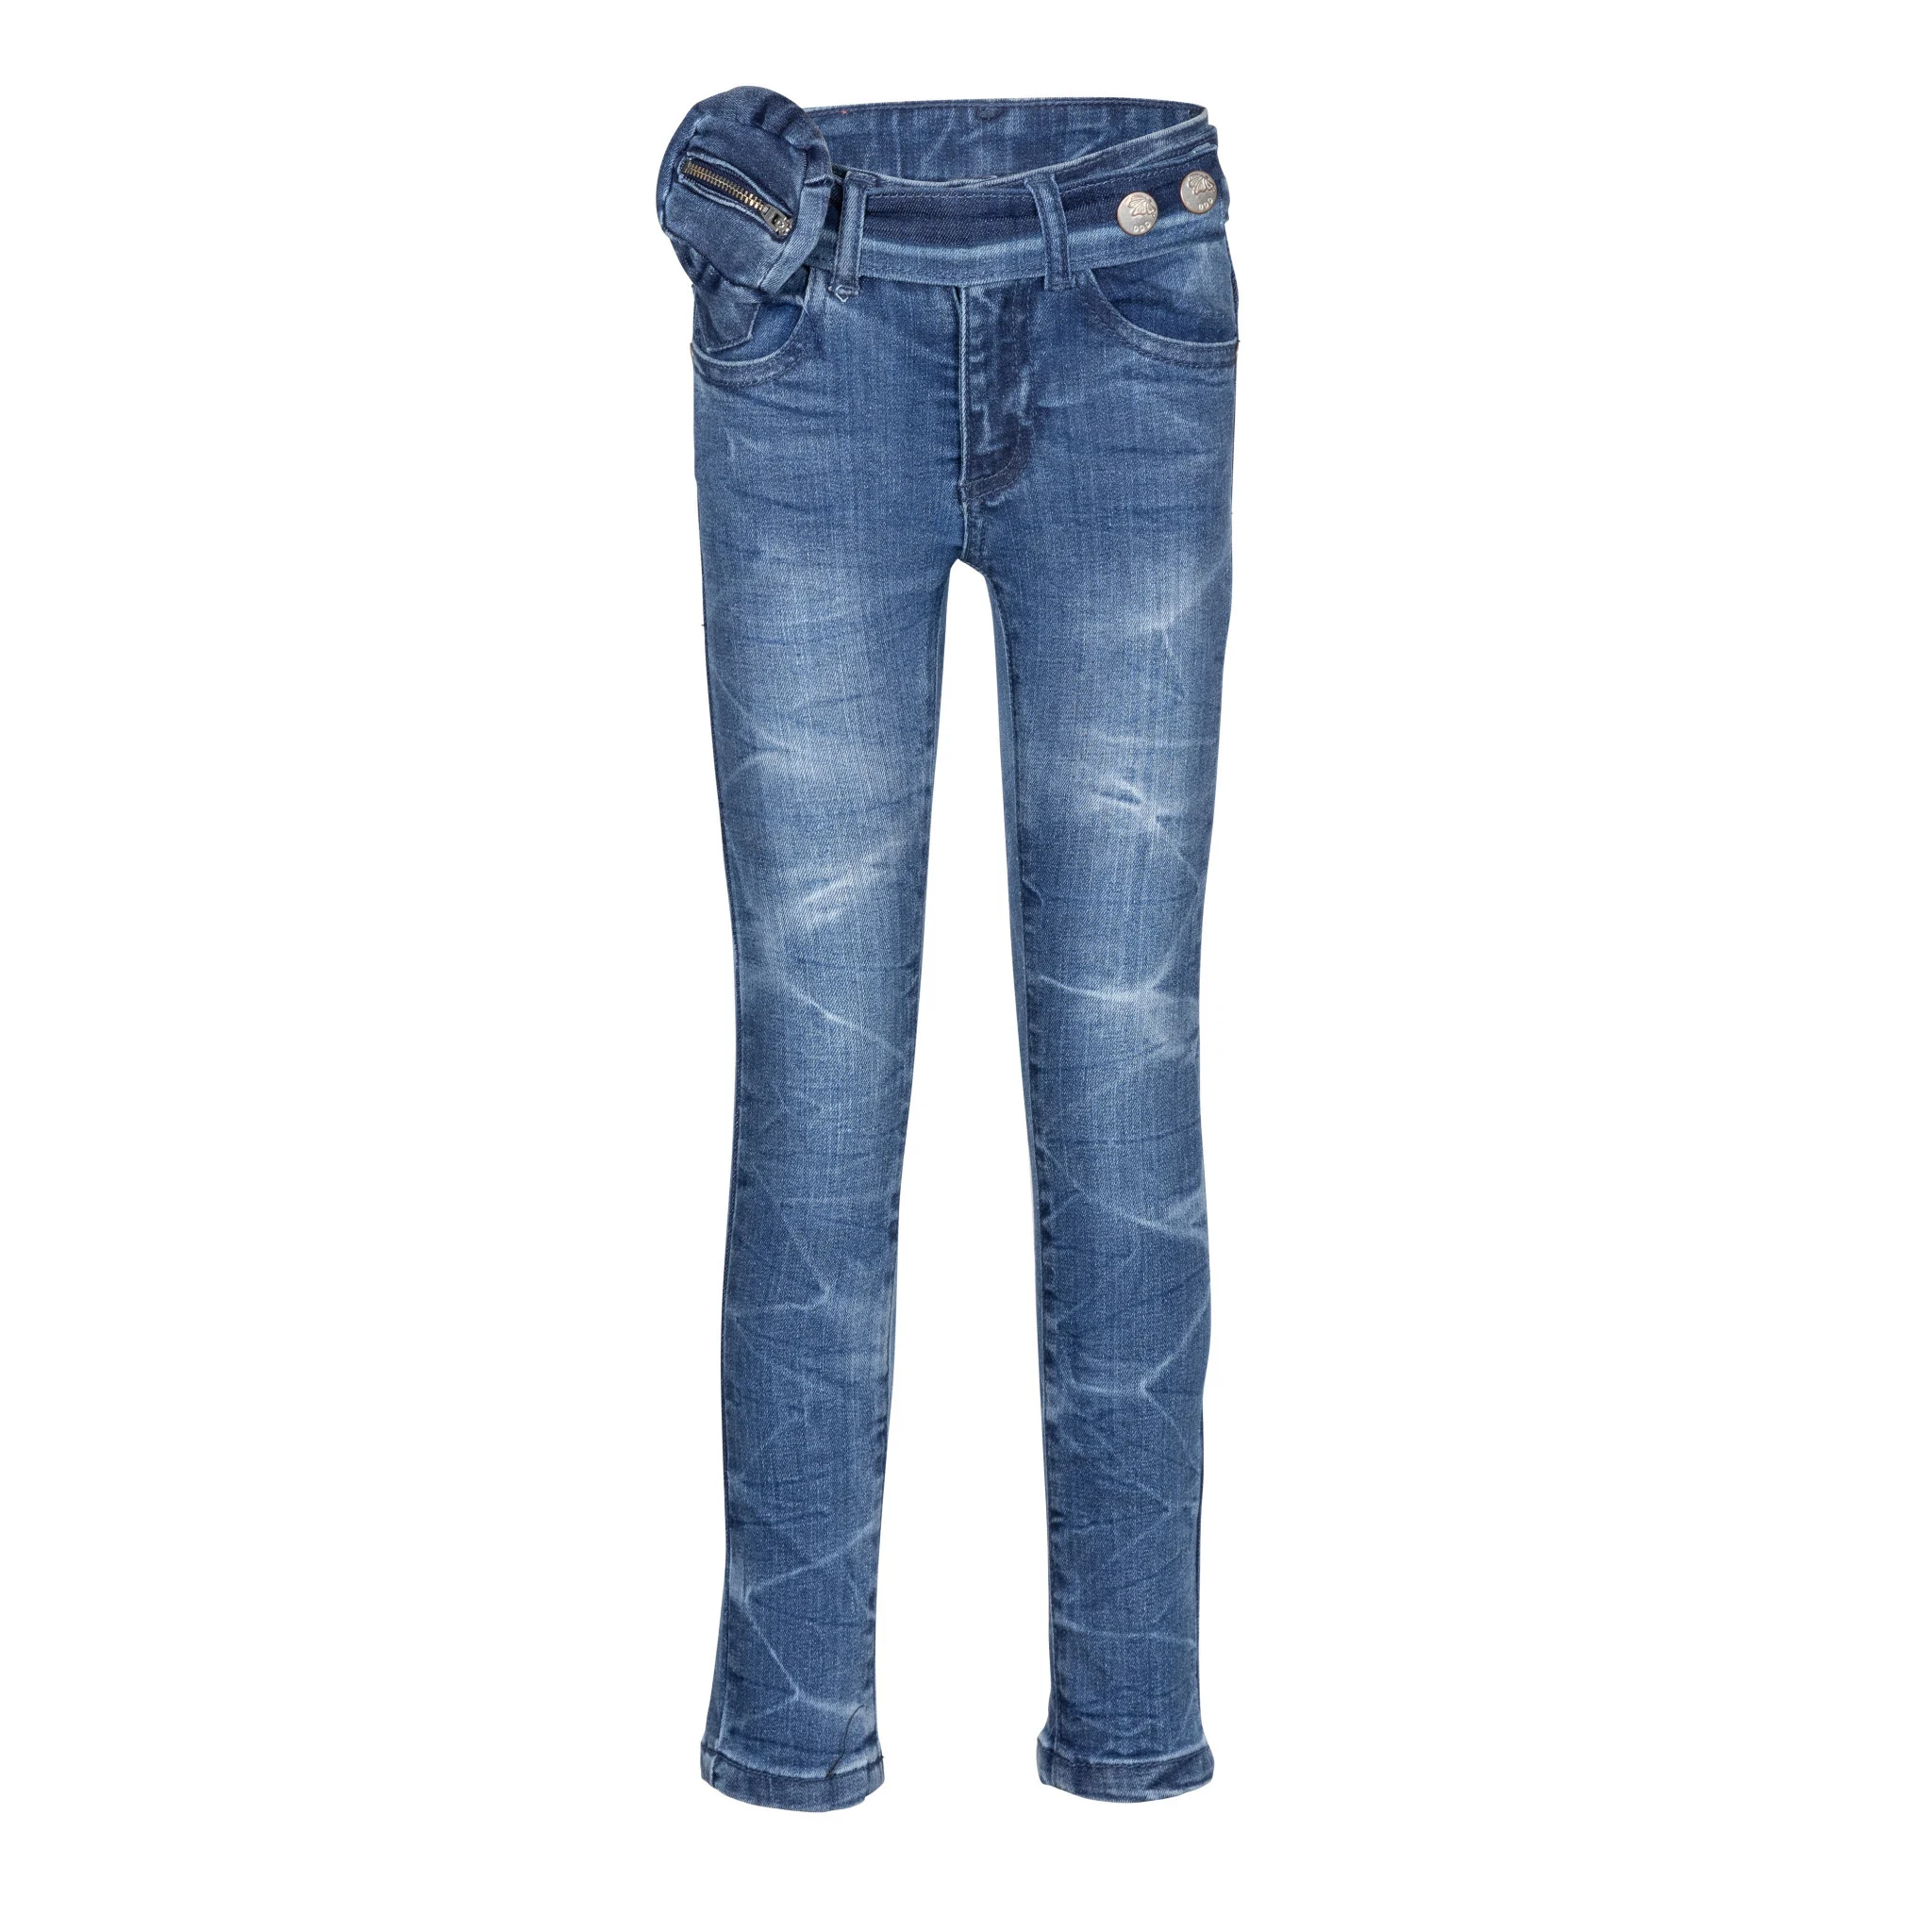 Afbeelding van Dutch Dream Denim Meiden jeans ngombe skinny fit washed blue